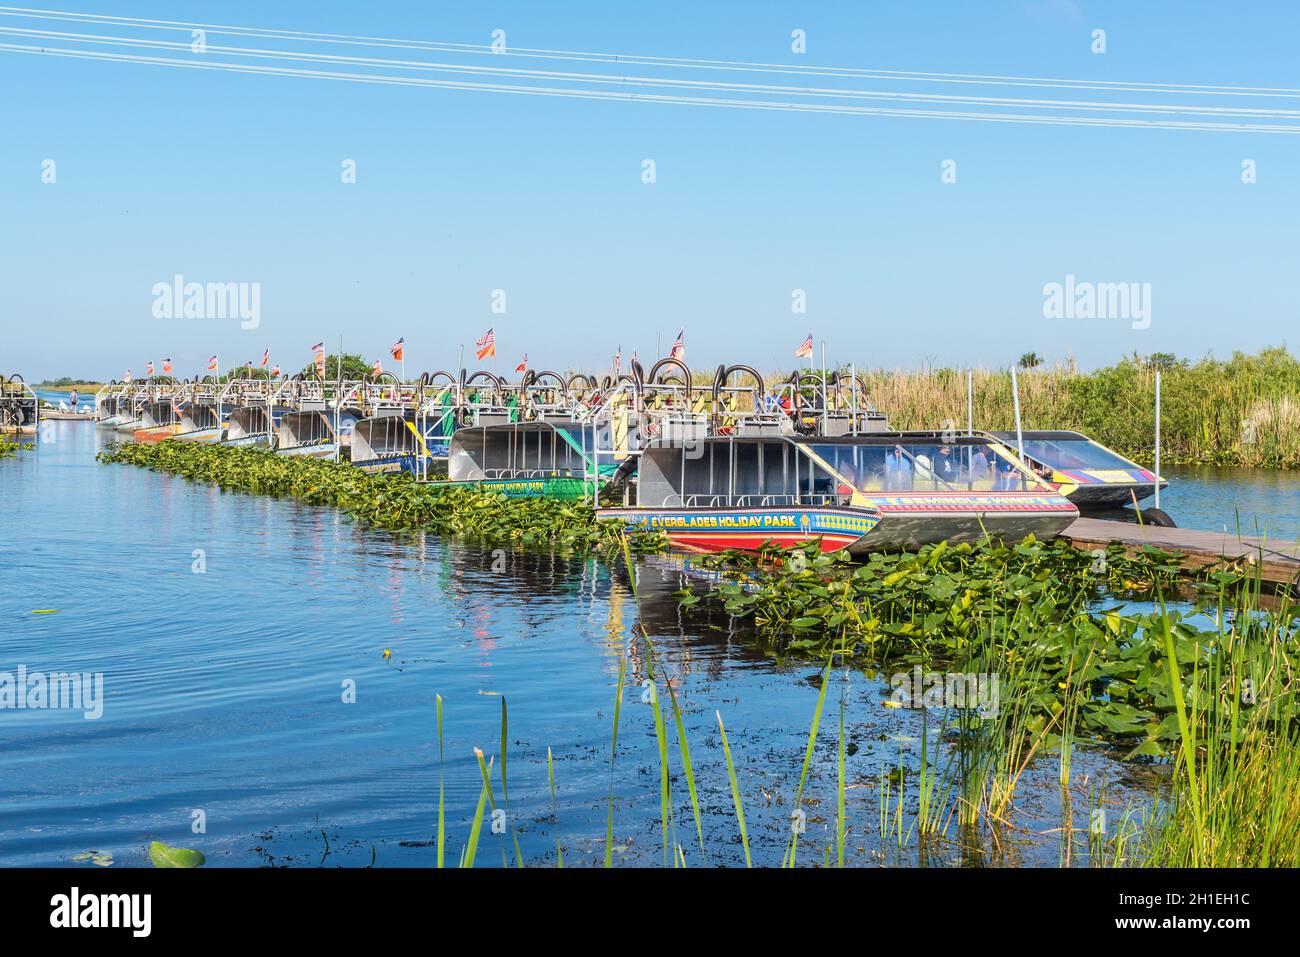 Everglades, Stati Uniti d'America - 27 aprile 2019: Airboats turistici ormeggiati in file slanciate in attesa di turisti nel Parco Nazionale di Everglades, Florida. Foto Stock